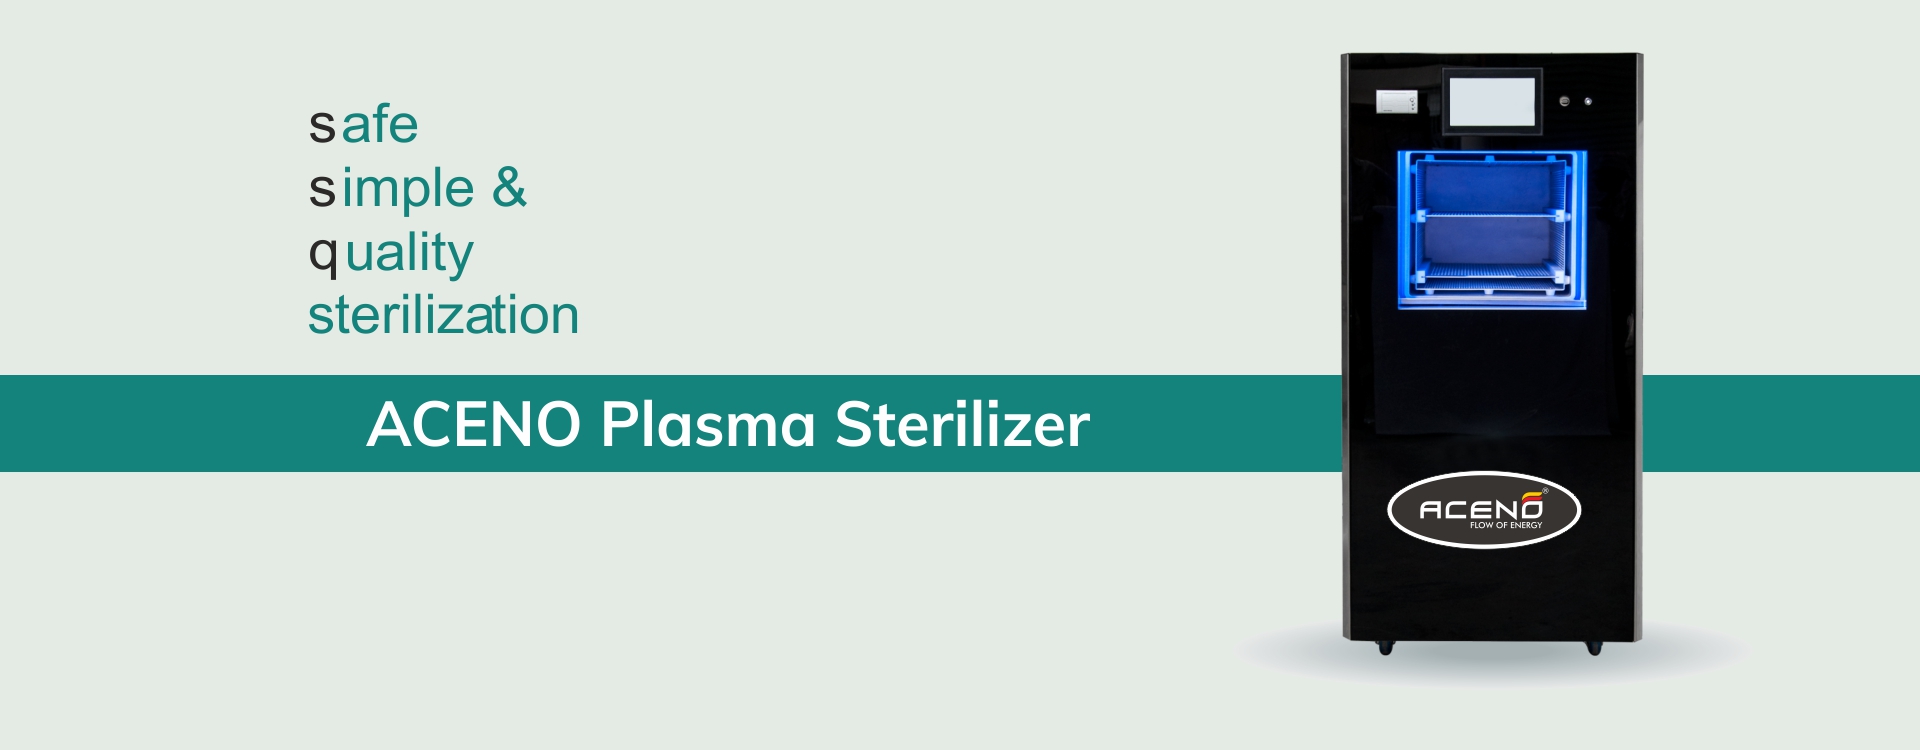 Aceno Plasma Sterilizer1